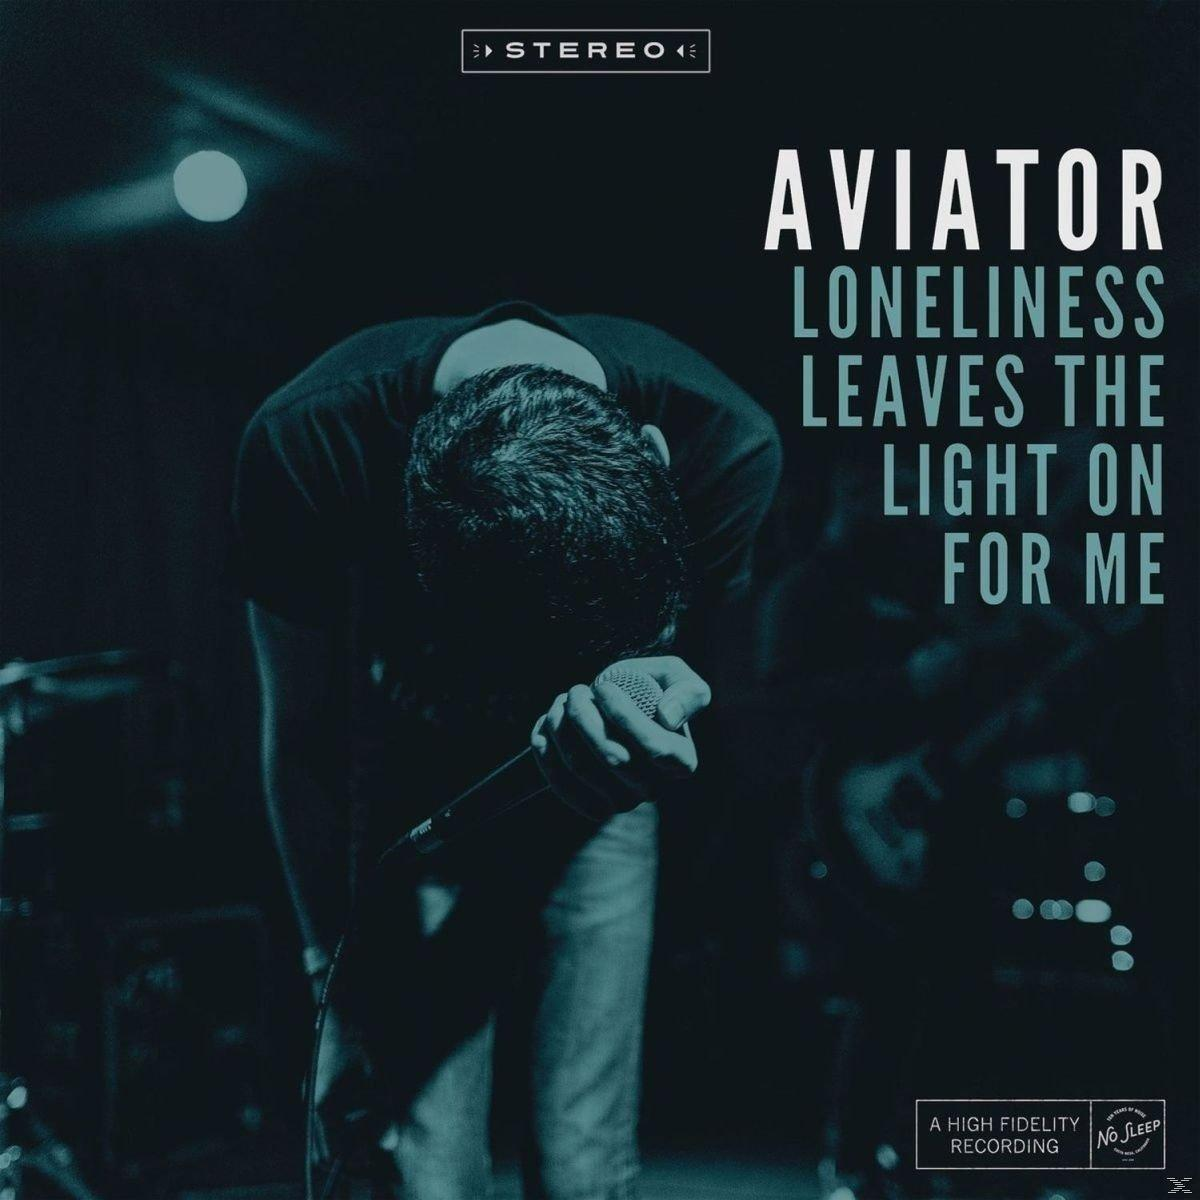 Light - On The (Vinyl) Leaves Aviator Loneliness - The